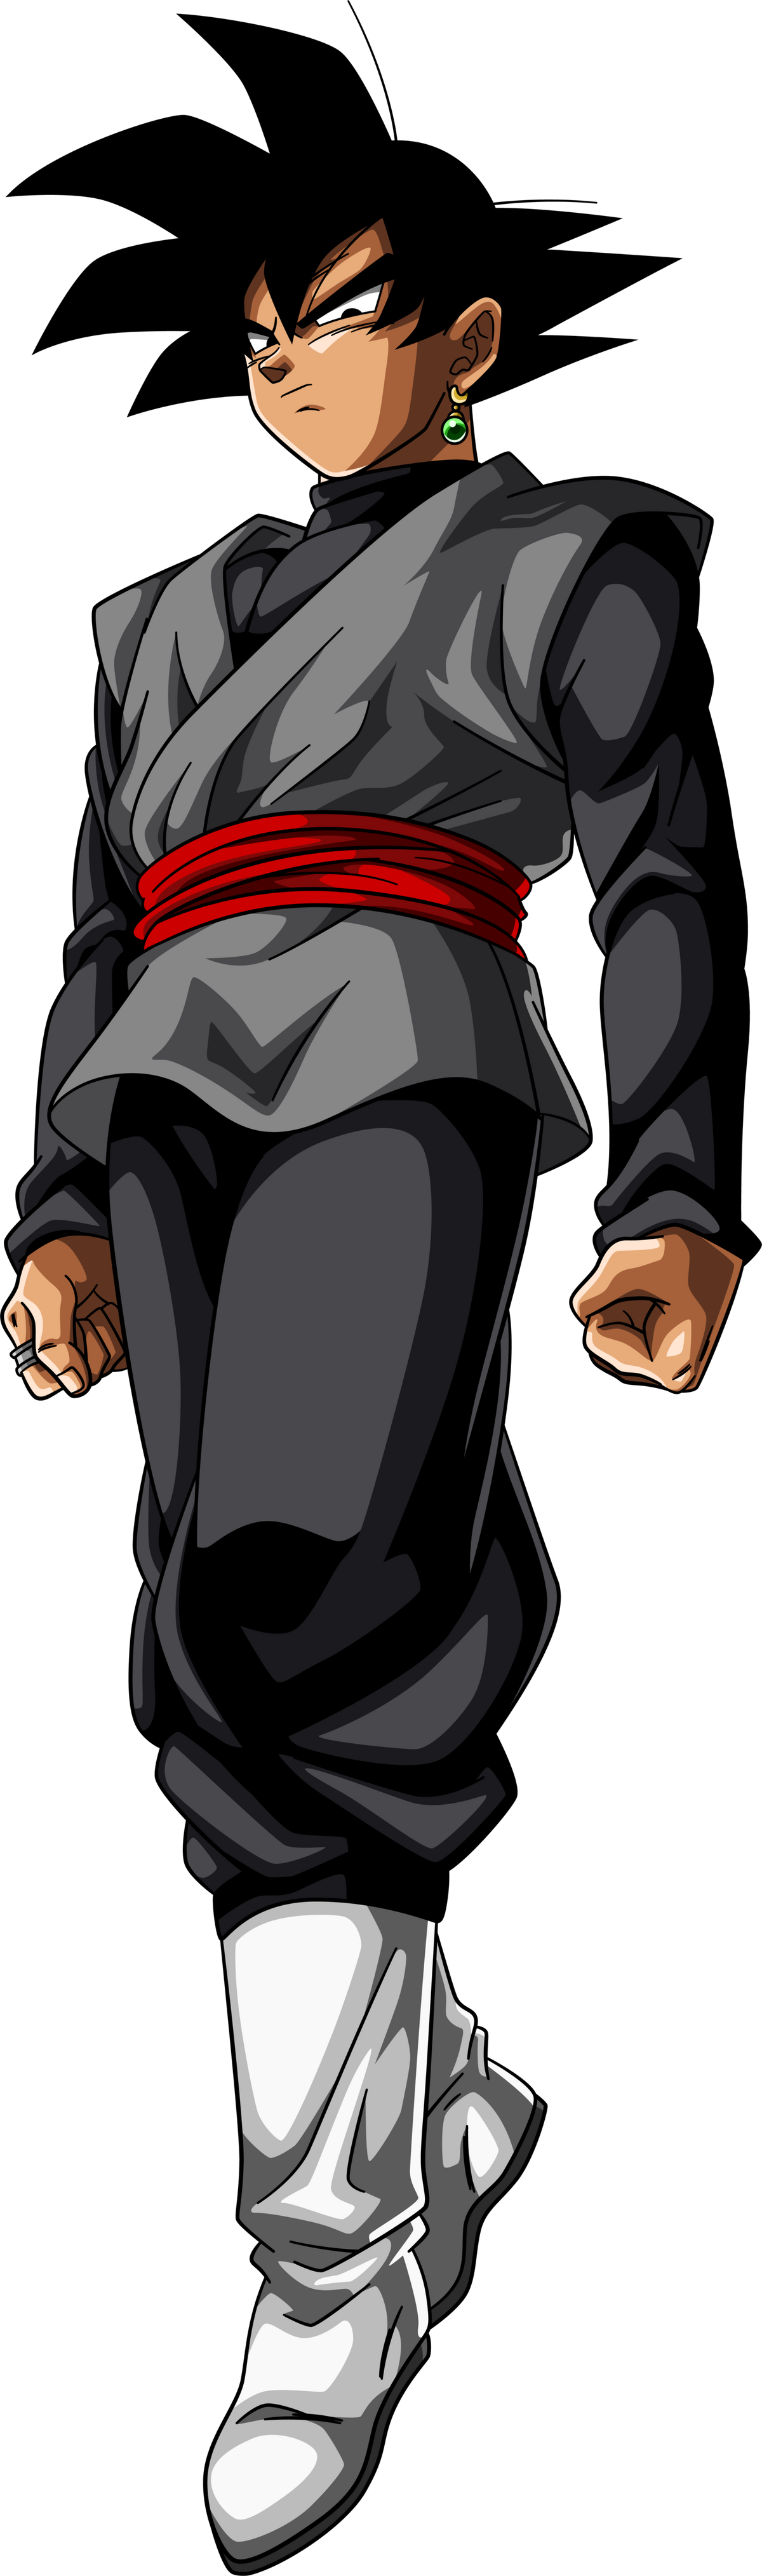 How to Draw Goku Super Saiyan Infinity [Full Body] | Drago… | Flickr